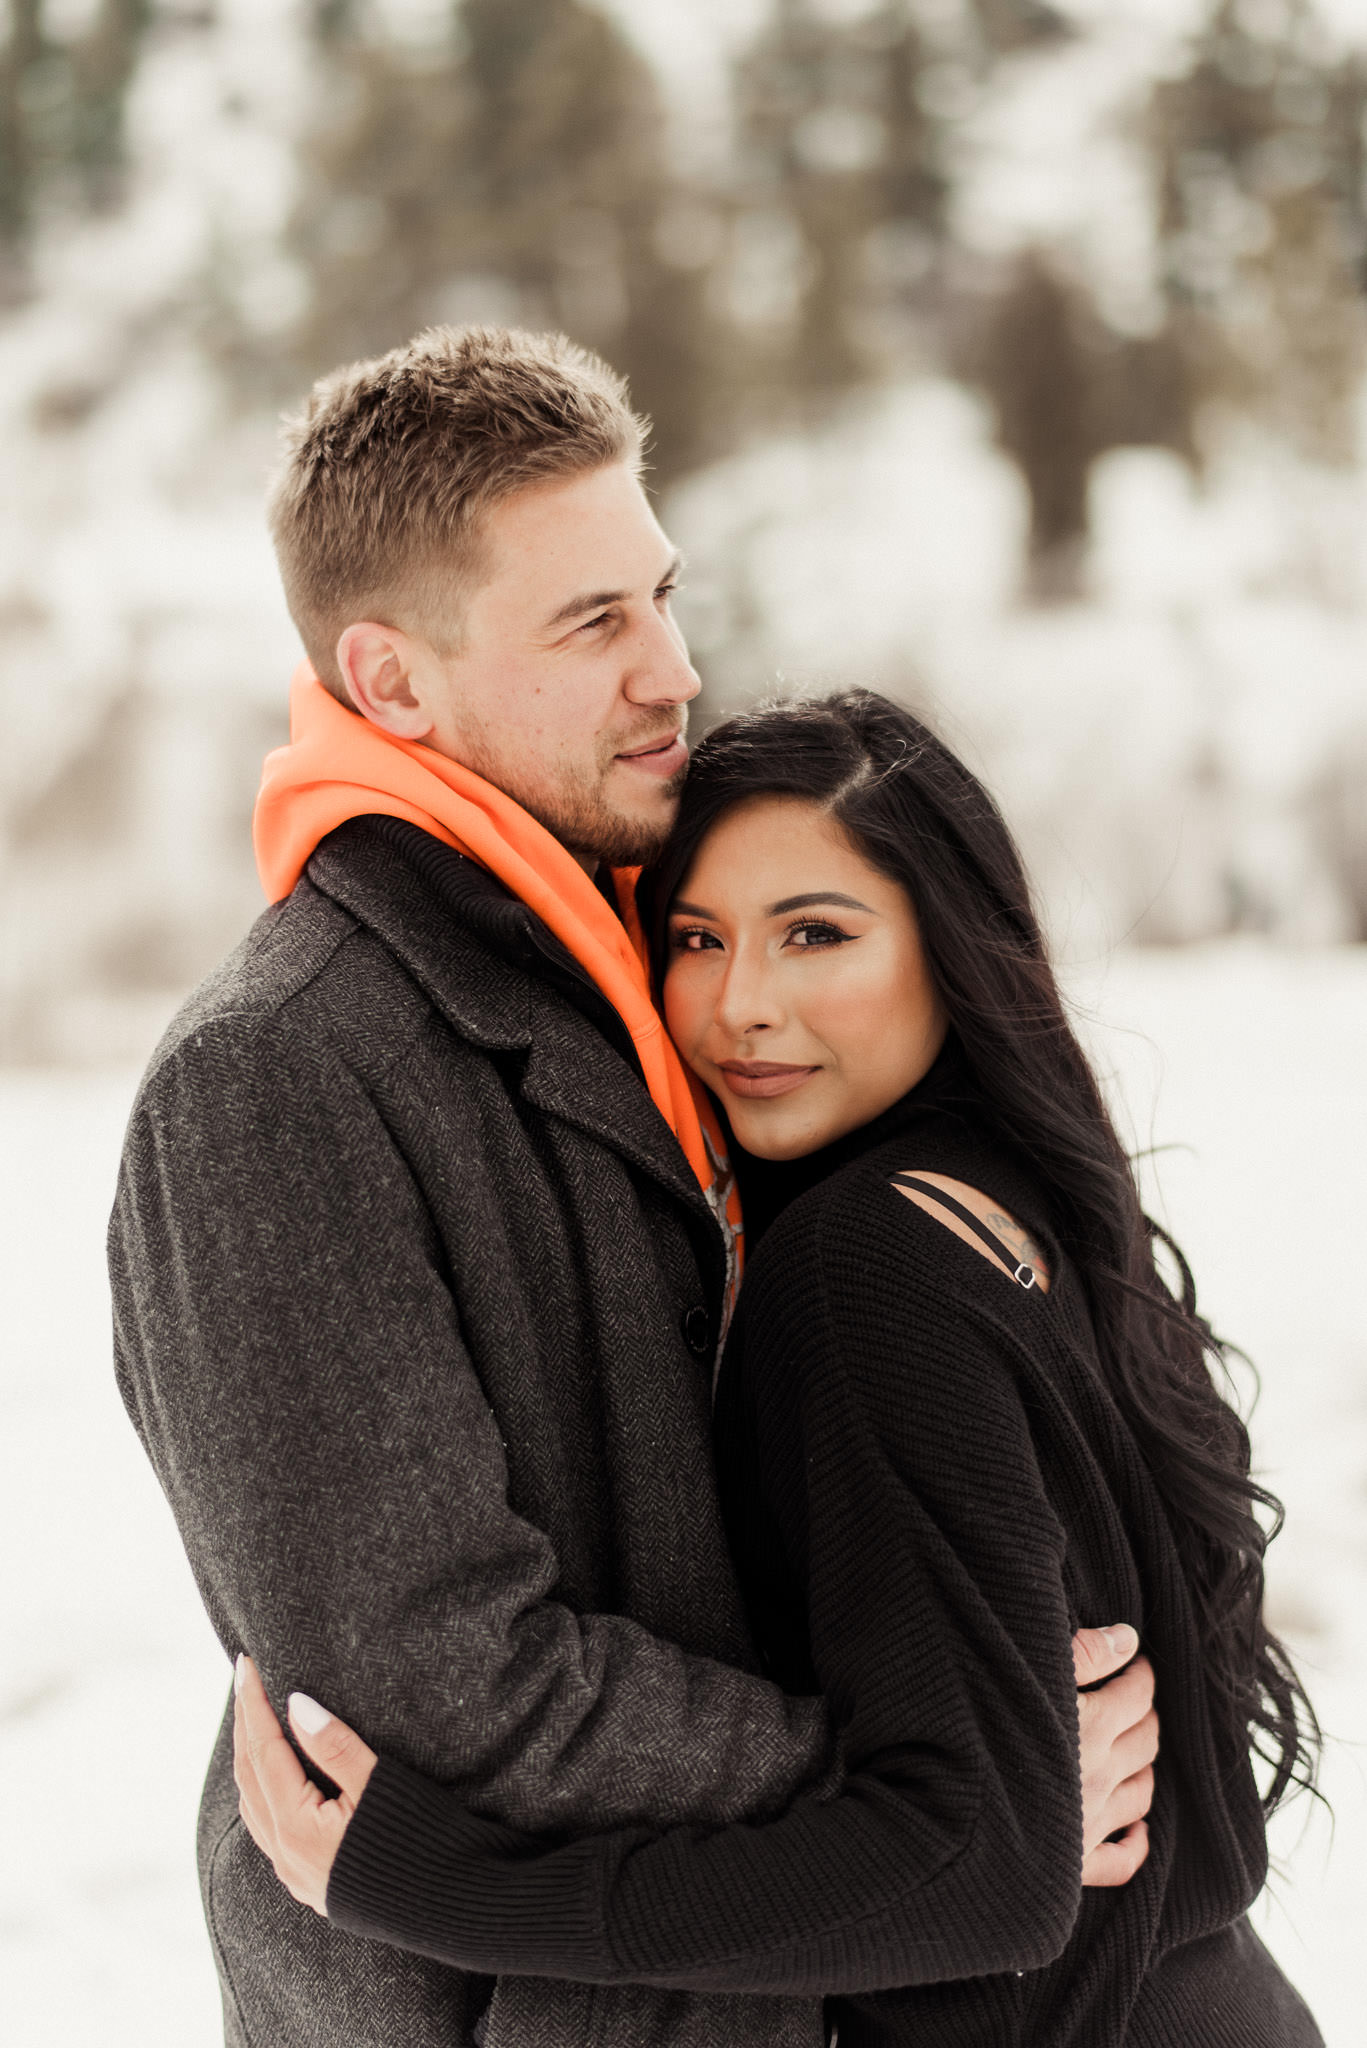 sandra-ryan-colorado-winter-snow-engagement-couples-valentines-red-houston-photographer-sm-37.jpg